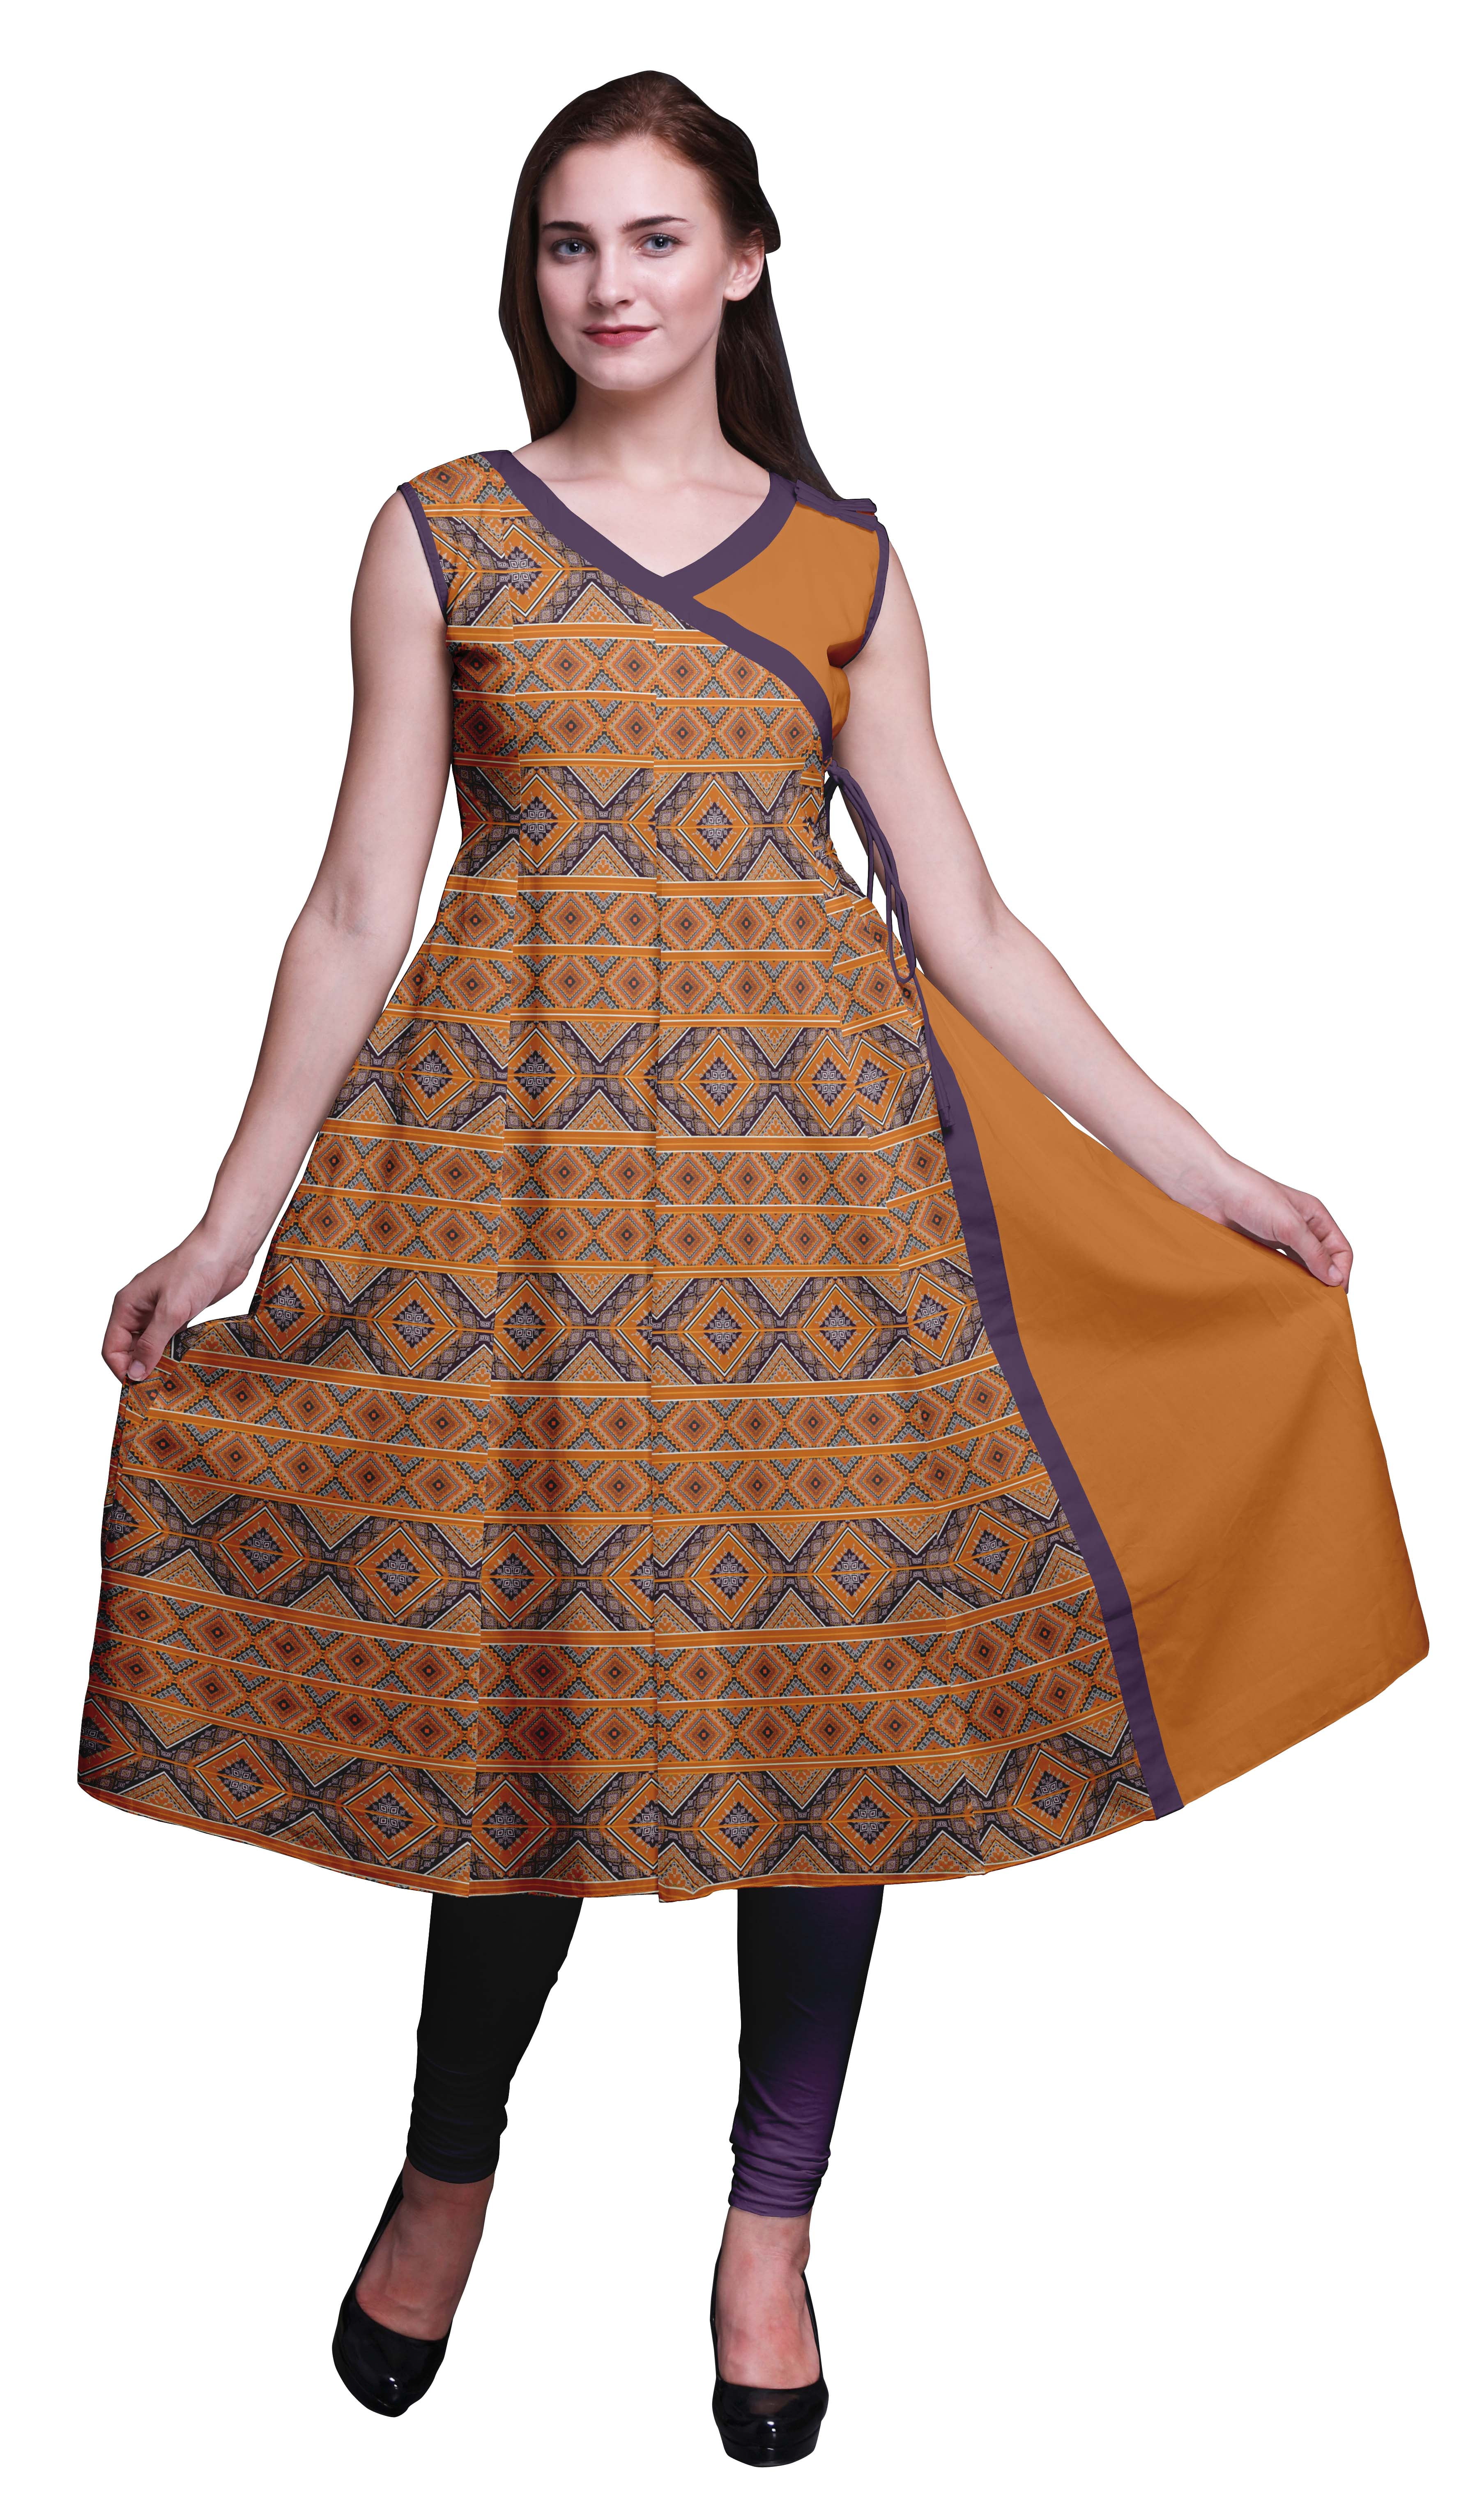 Details about   Indian Women Kurta Kurti Ethnic Designer Dress Top Tunic St Patrick's Day Offer